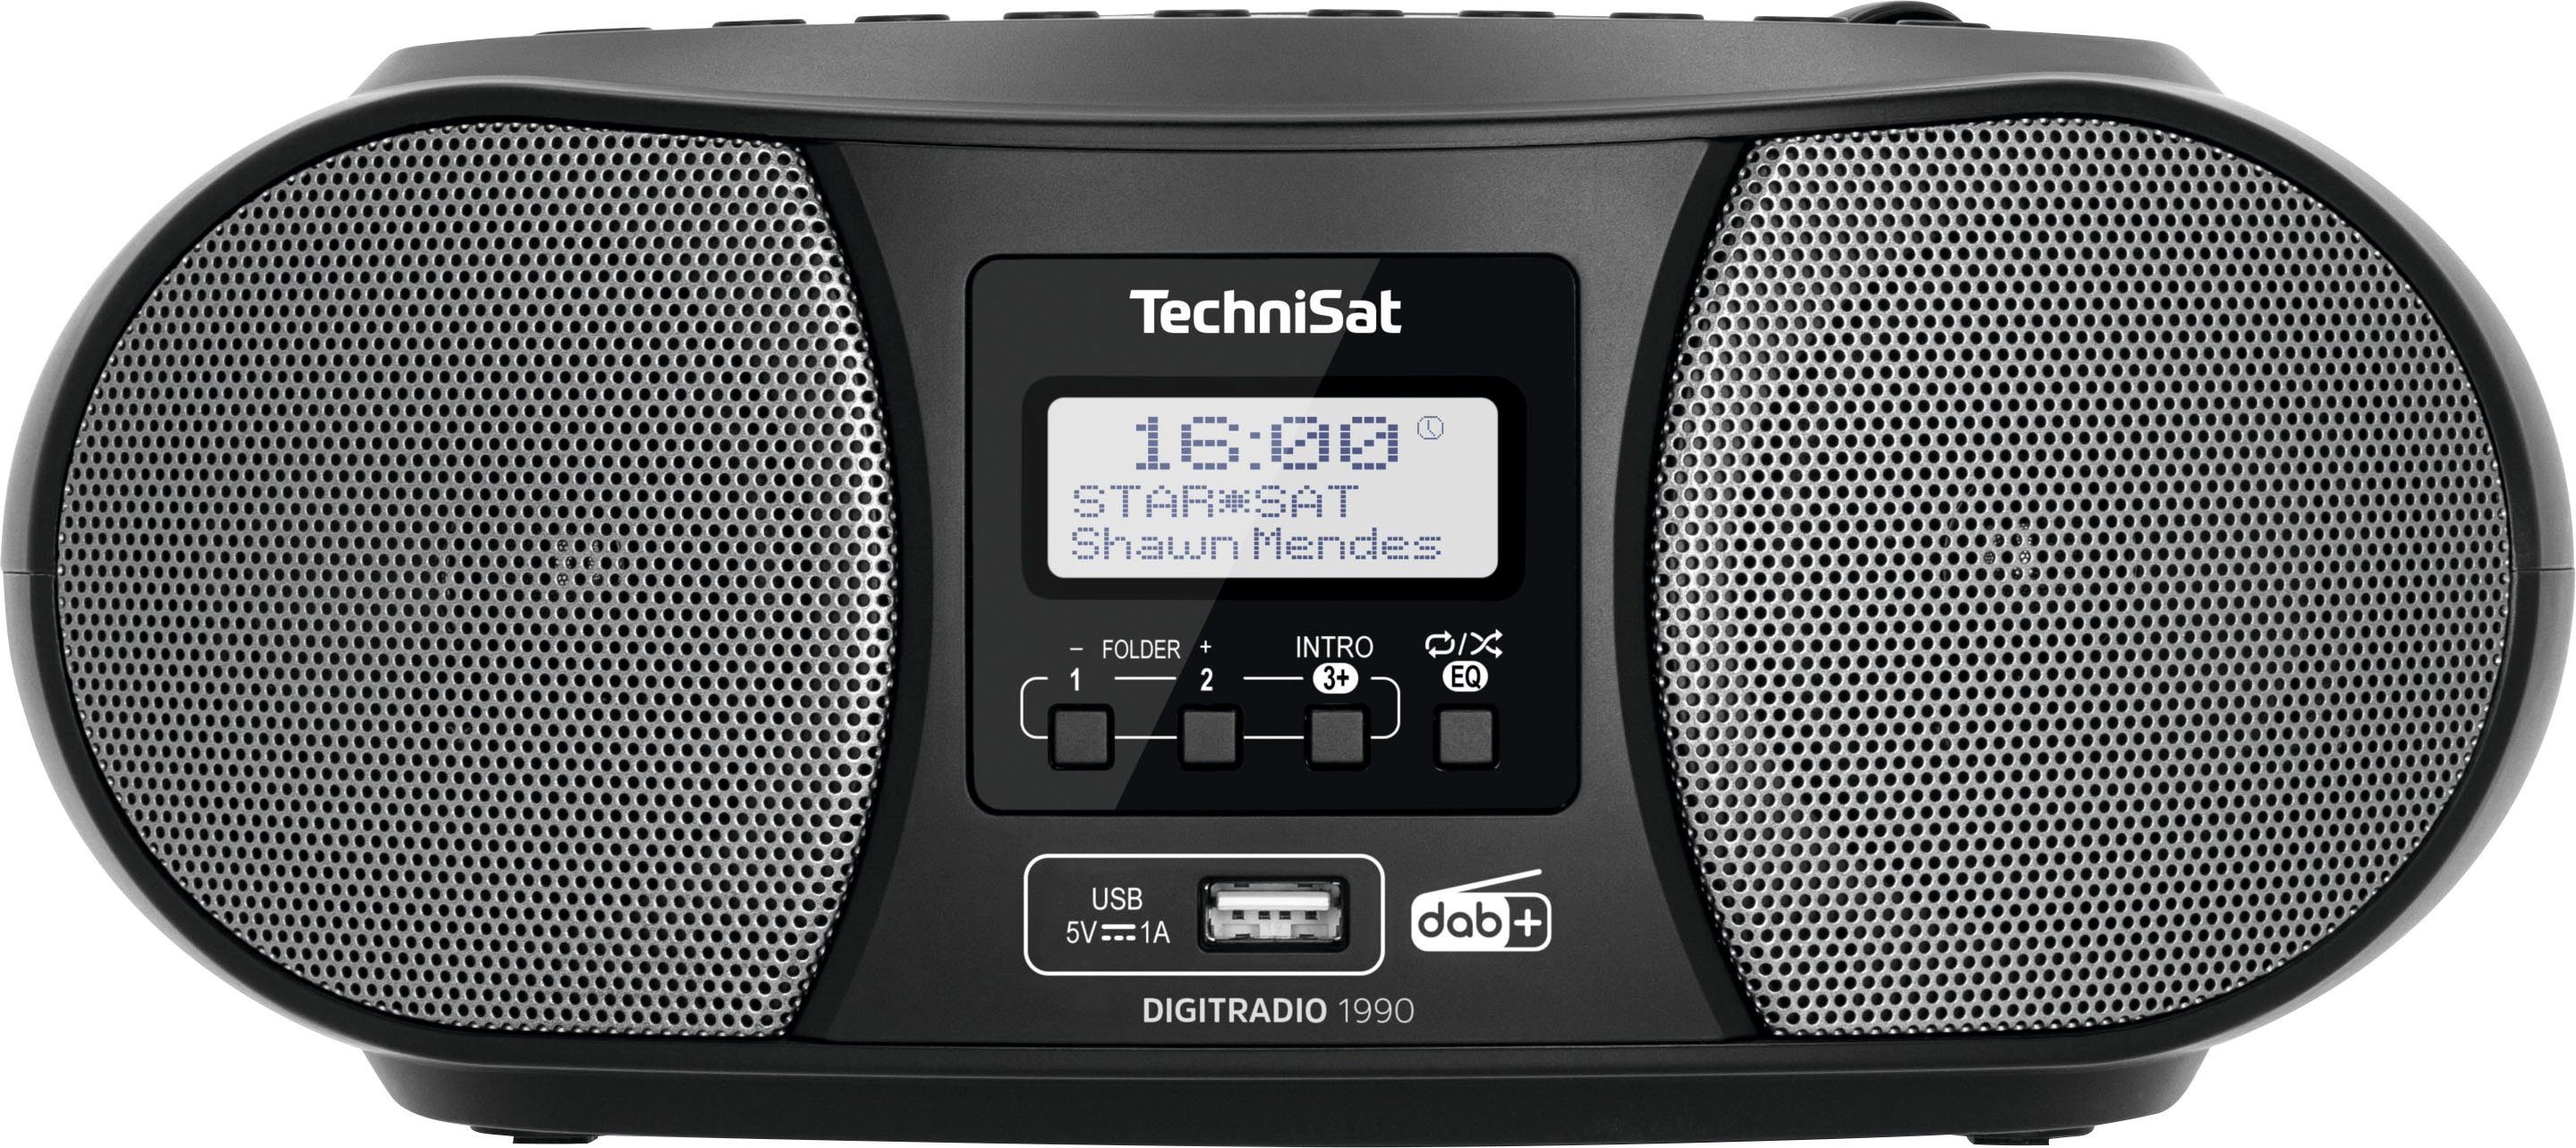 TechniSat Digitradio 1990 Stereo- Boombox (Digitalradio (DAB), FM-Tuner,  mit DAB+, UKW, CD-Player, Bluetooth, USB, Batteriebetrieb möglich)